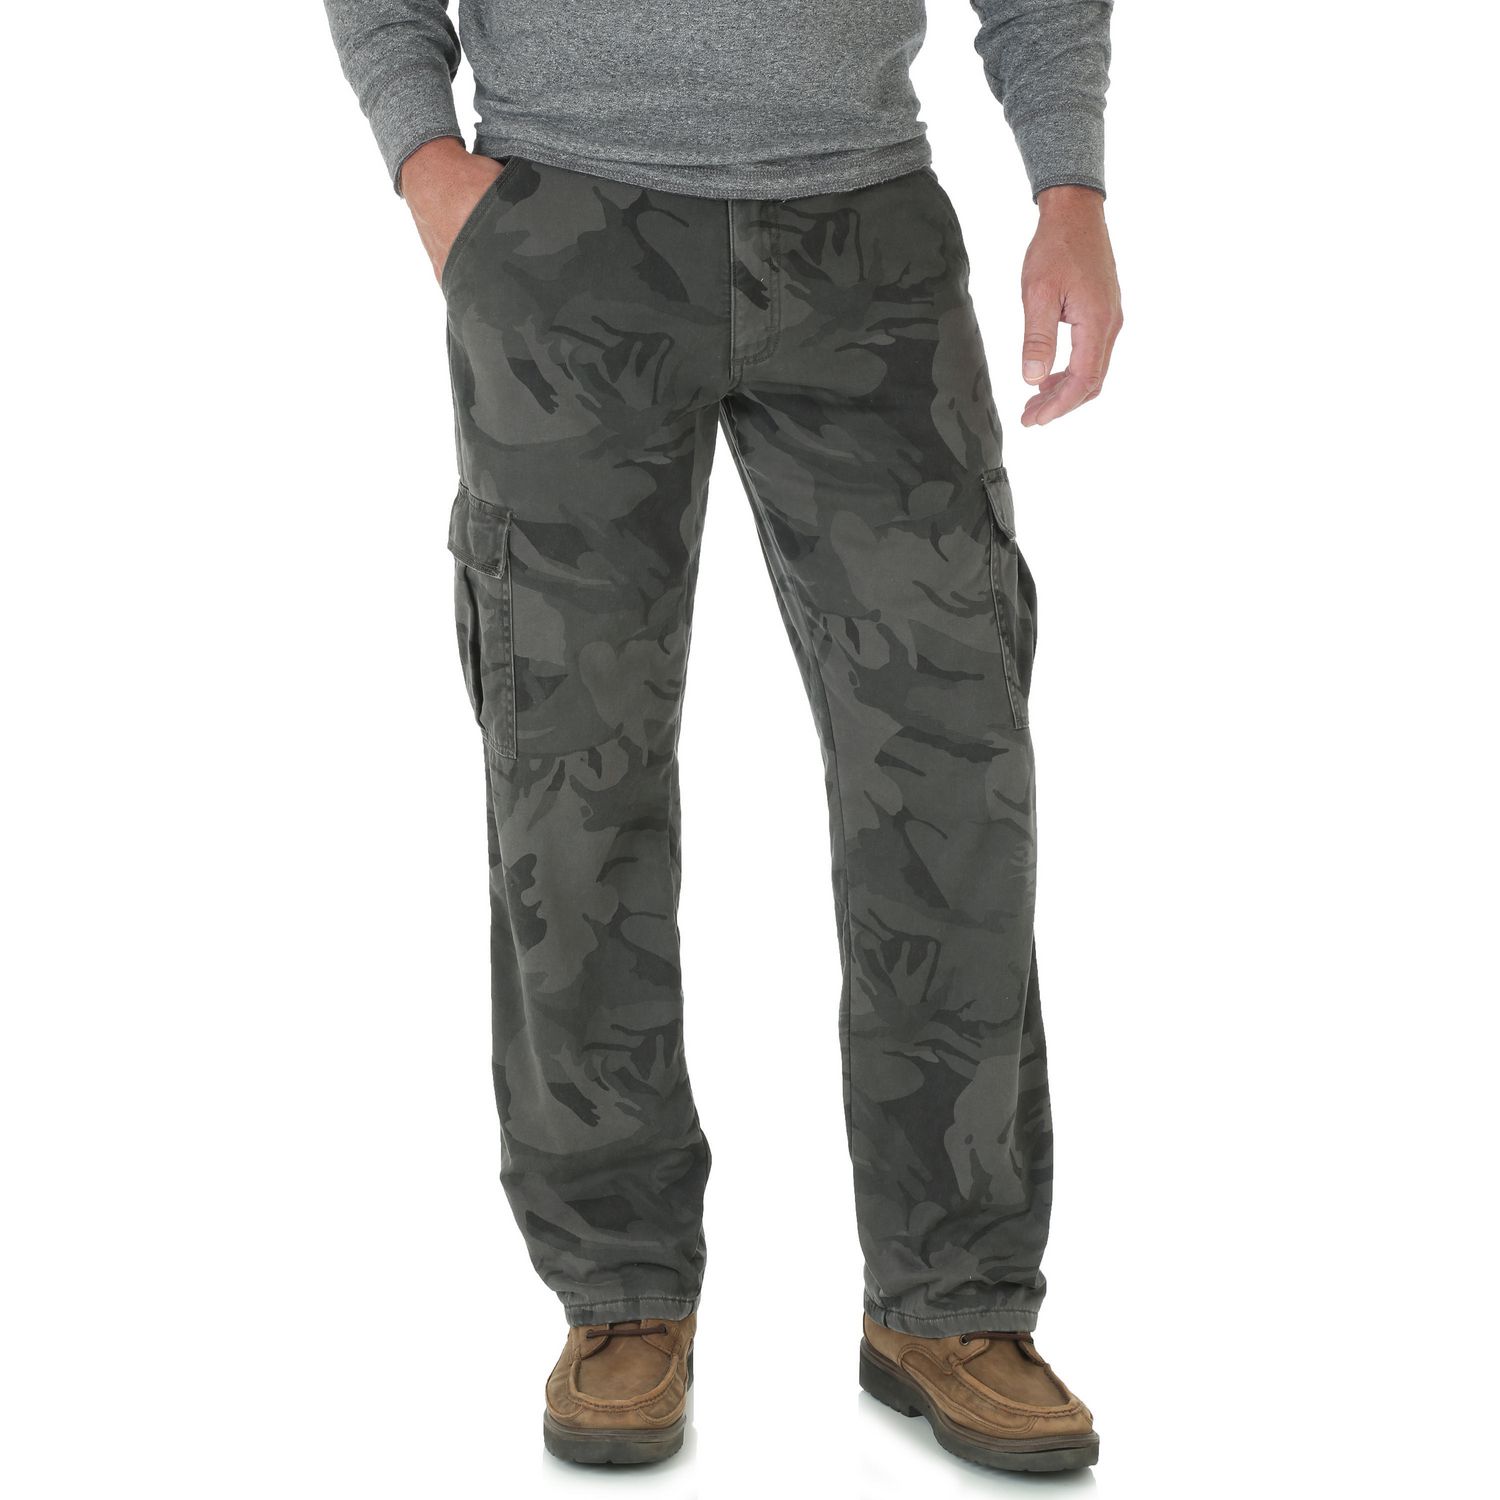 flannel lined cargo pants walmart